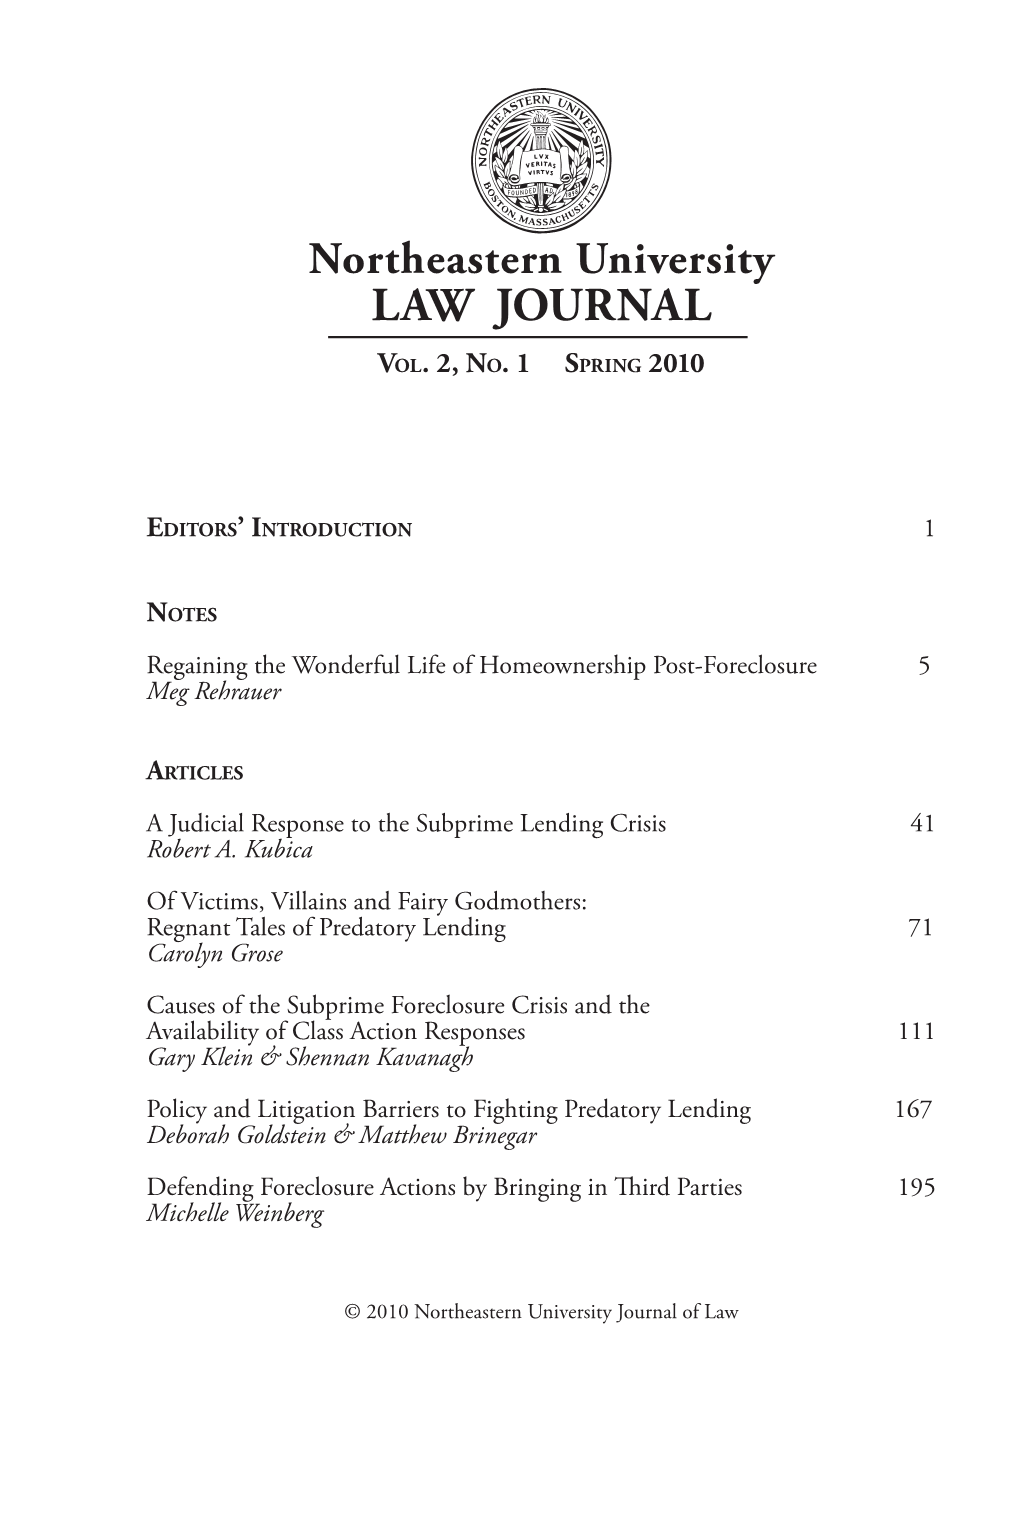 Northeastern University Law Journal, Vol. 2, No. 1, Spring 2010